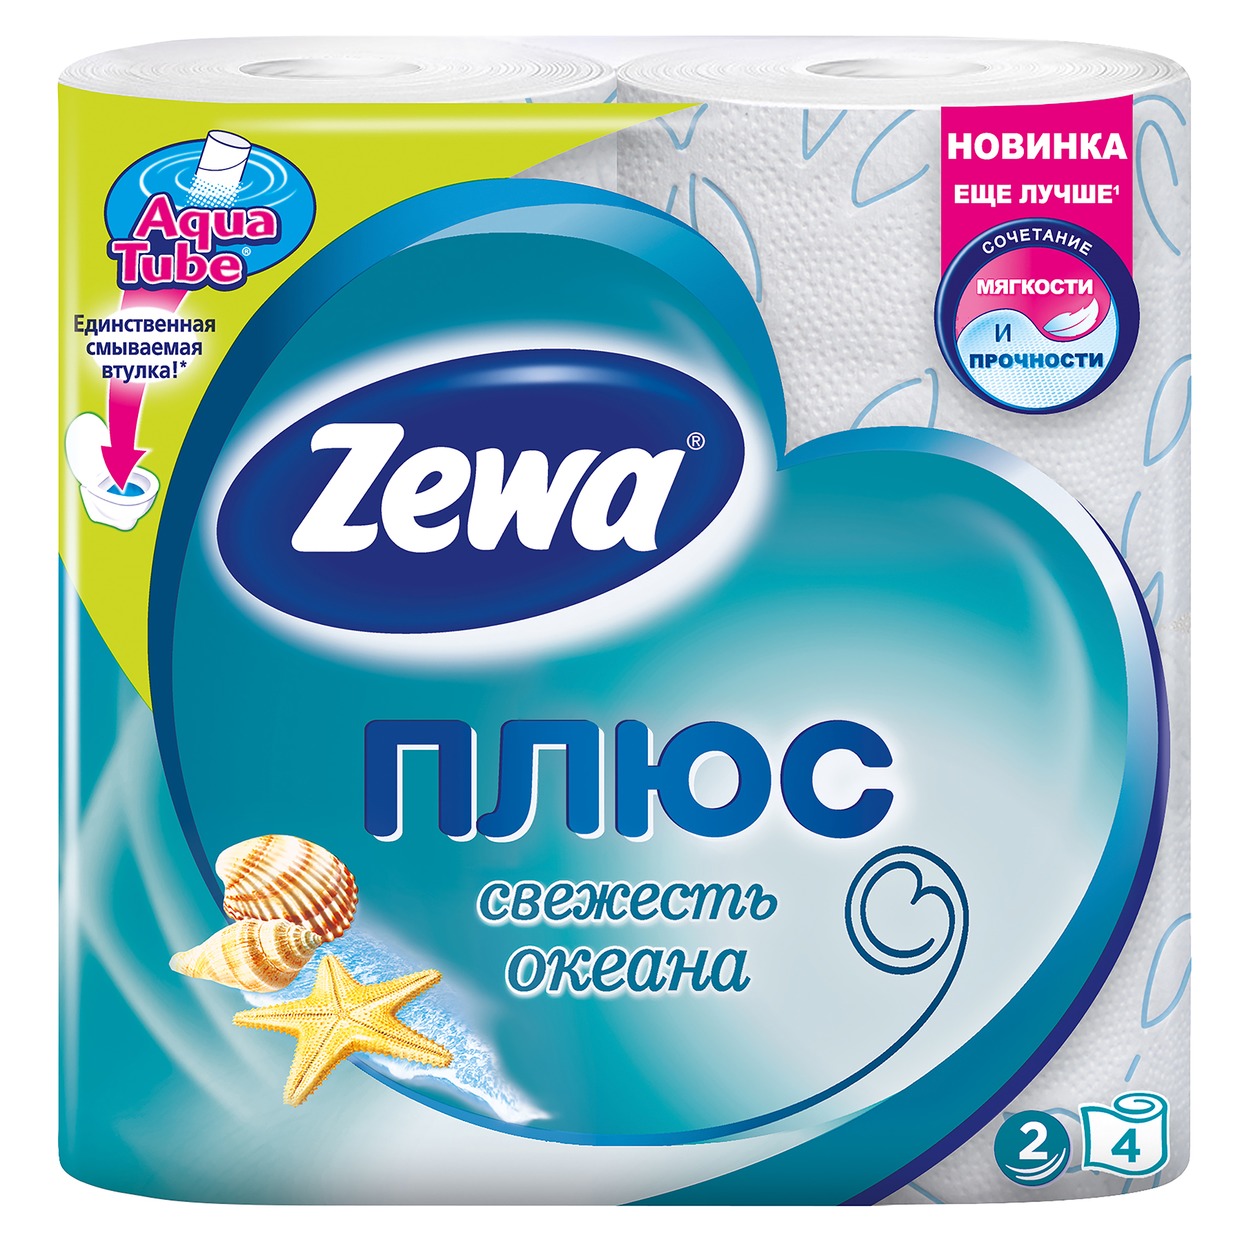 Бумага туалетная Zewa Plus зеленая 2 слоя 4 шт. по акции в Пятерочке